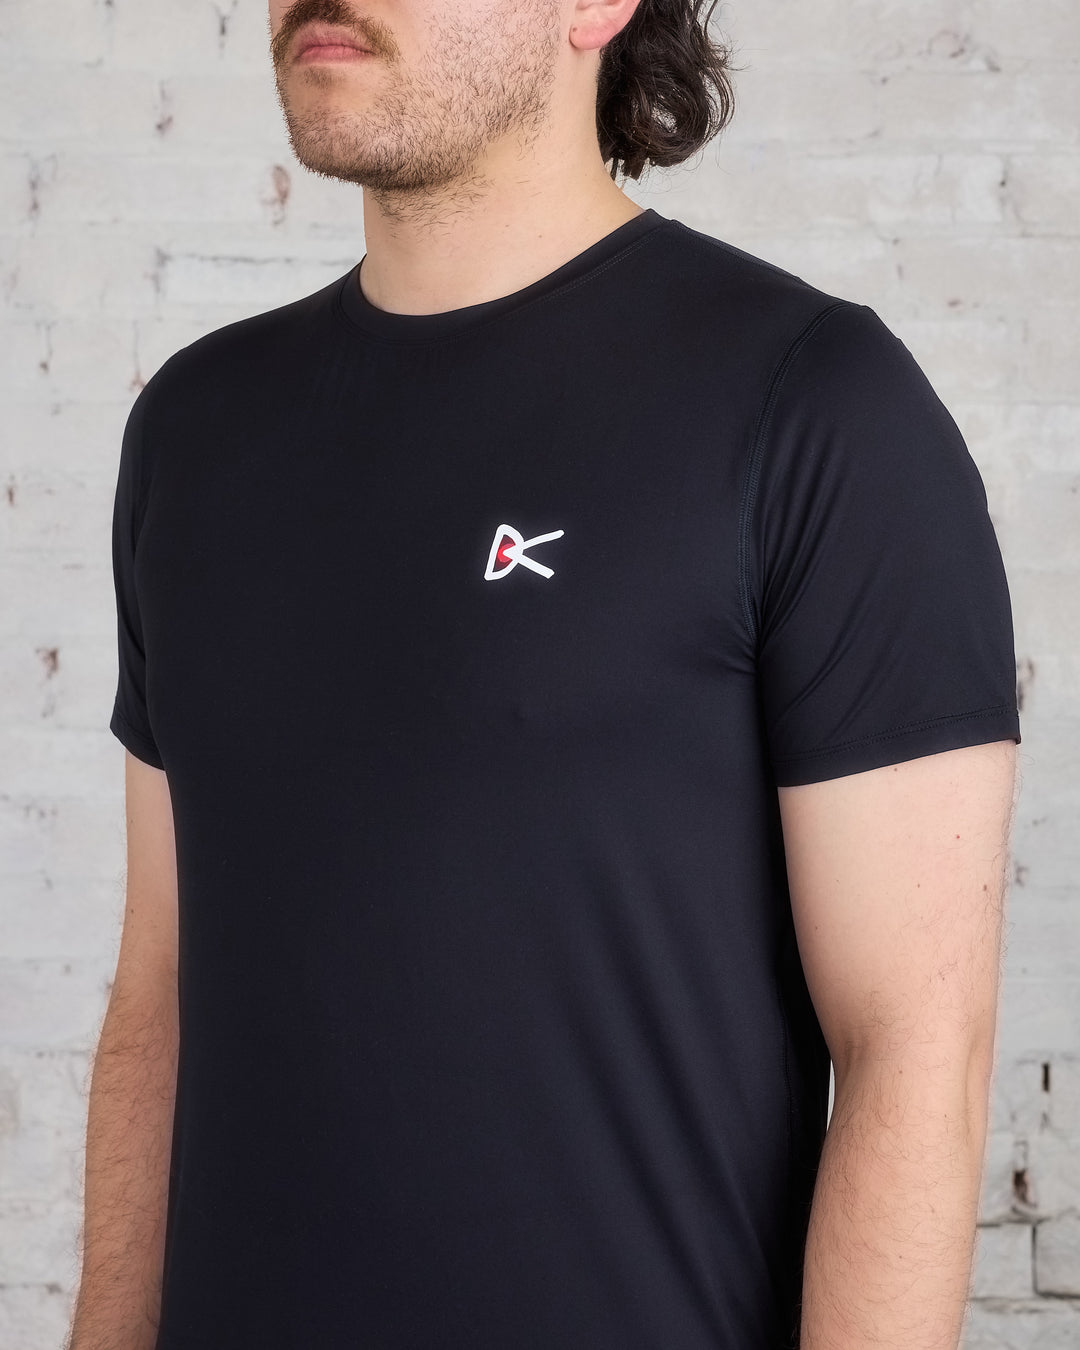 District Vision Ultralight Aloe T-Shirt Black – LESS 17